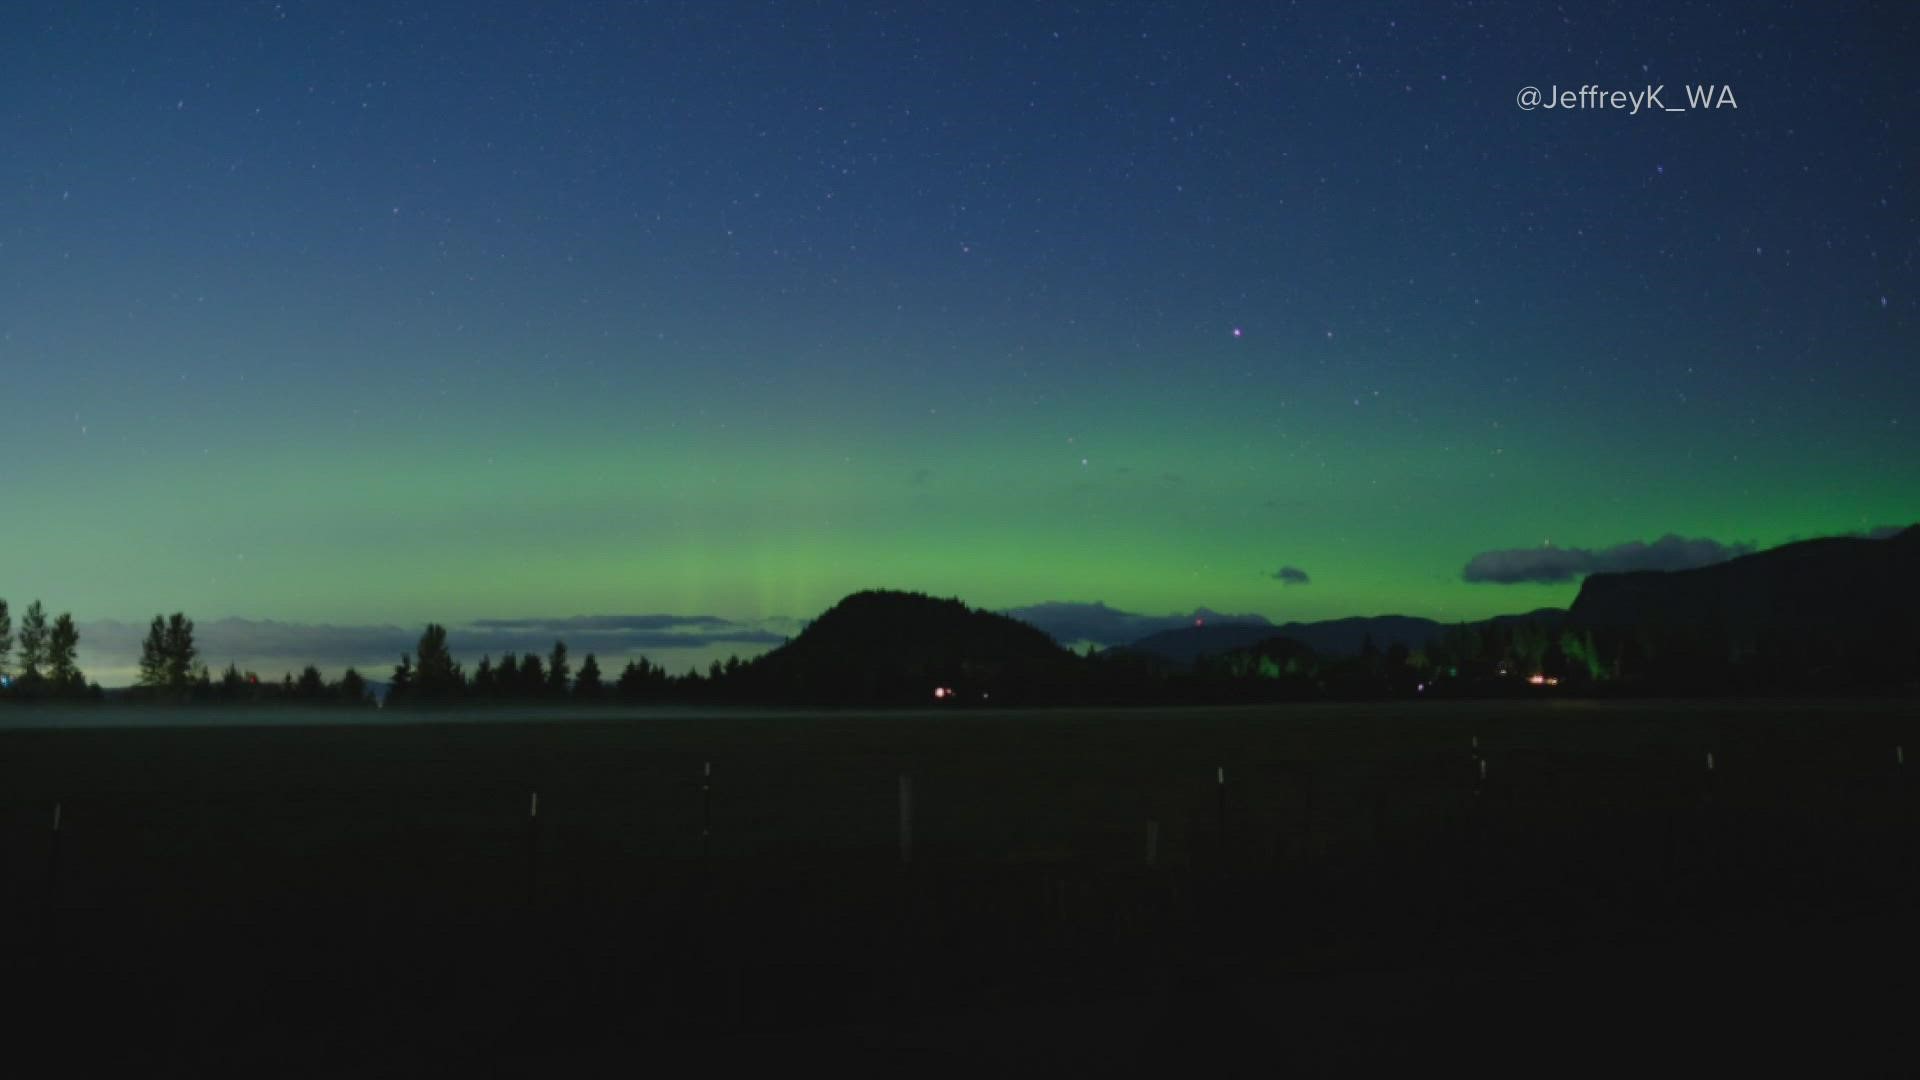 Stargazers in western Washington were treated to an amazing Aurora Borealis show overnight Monday